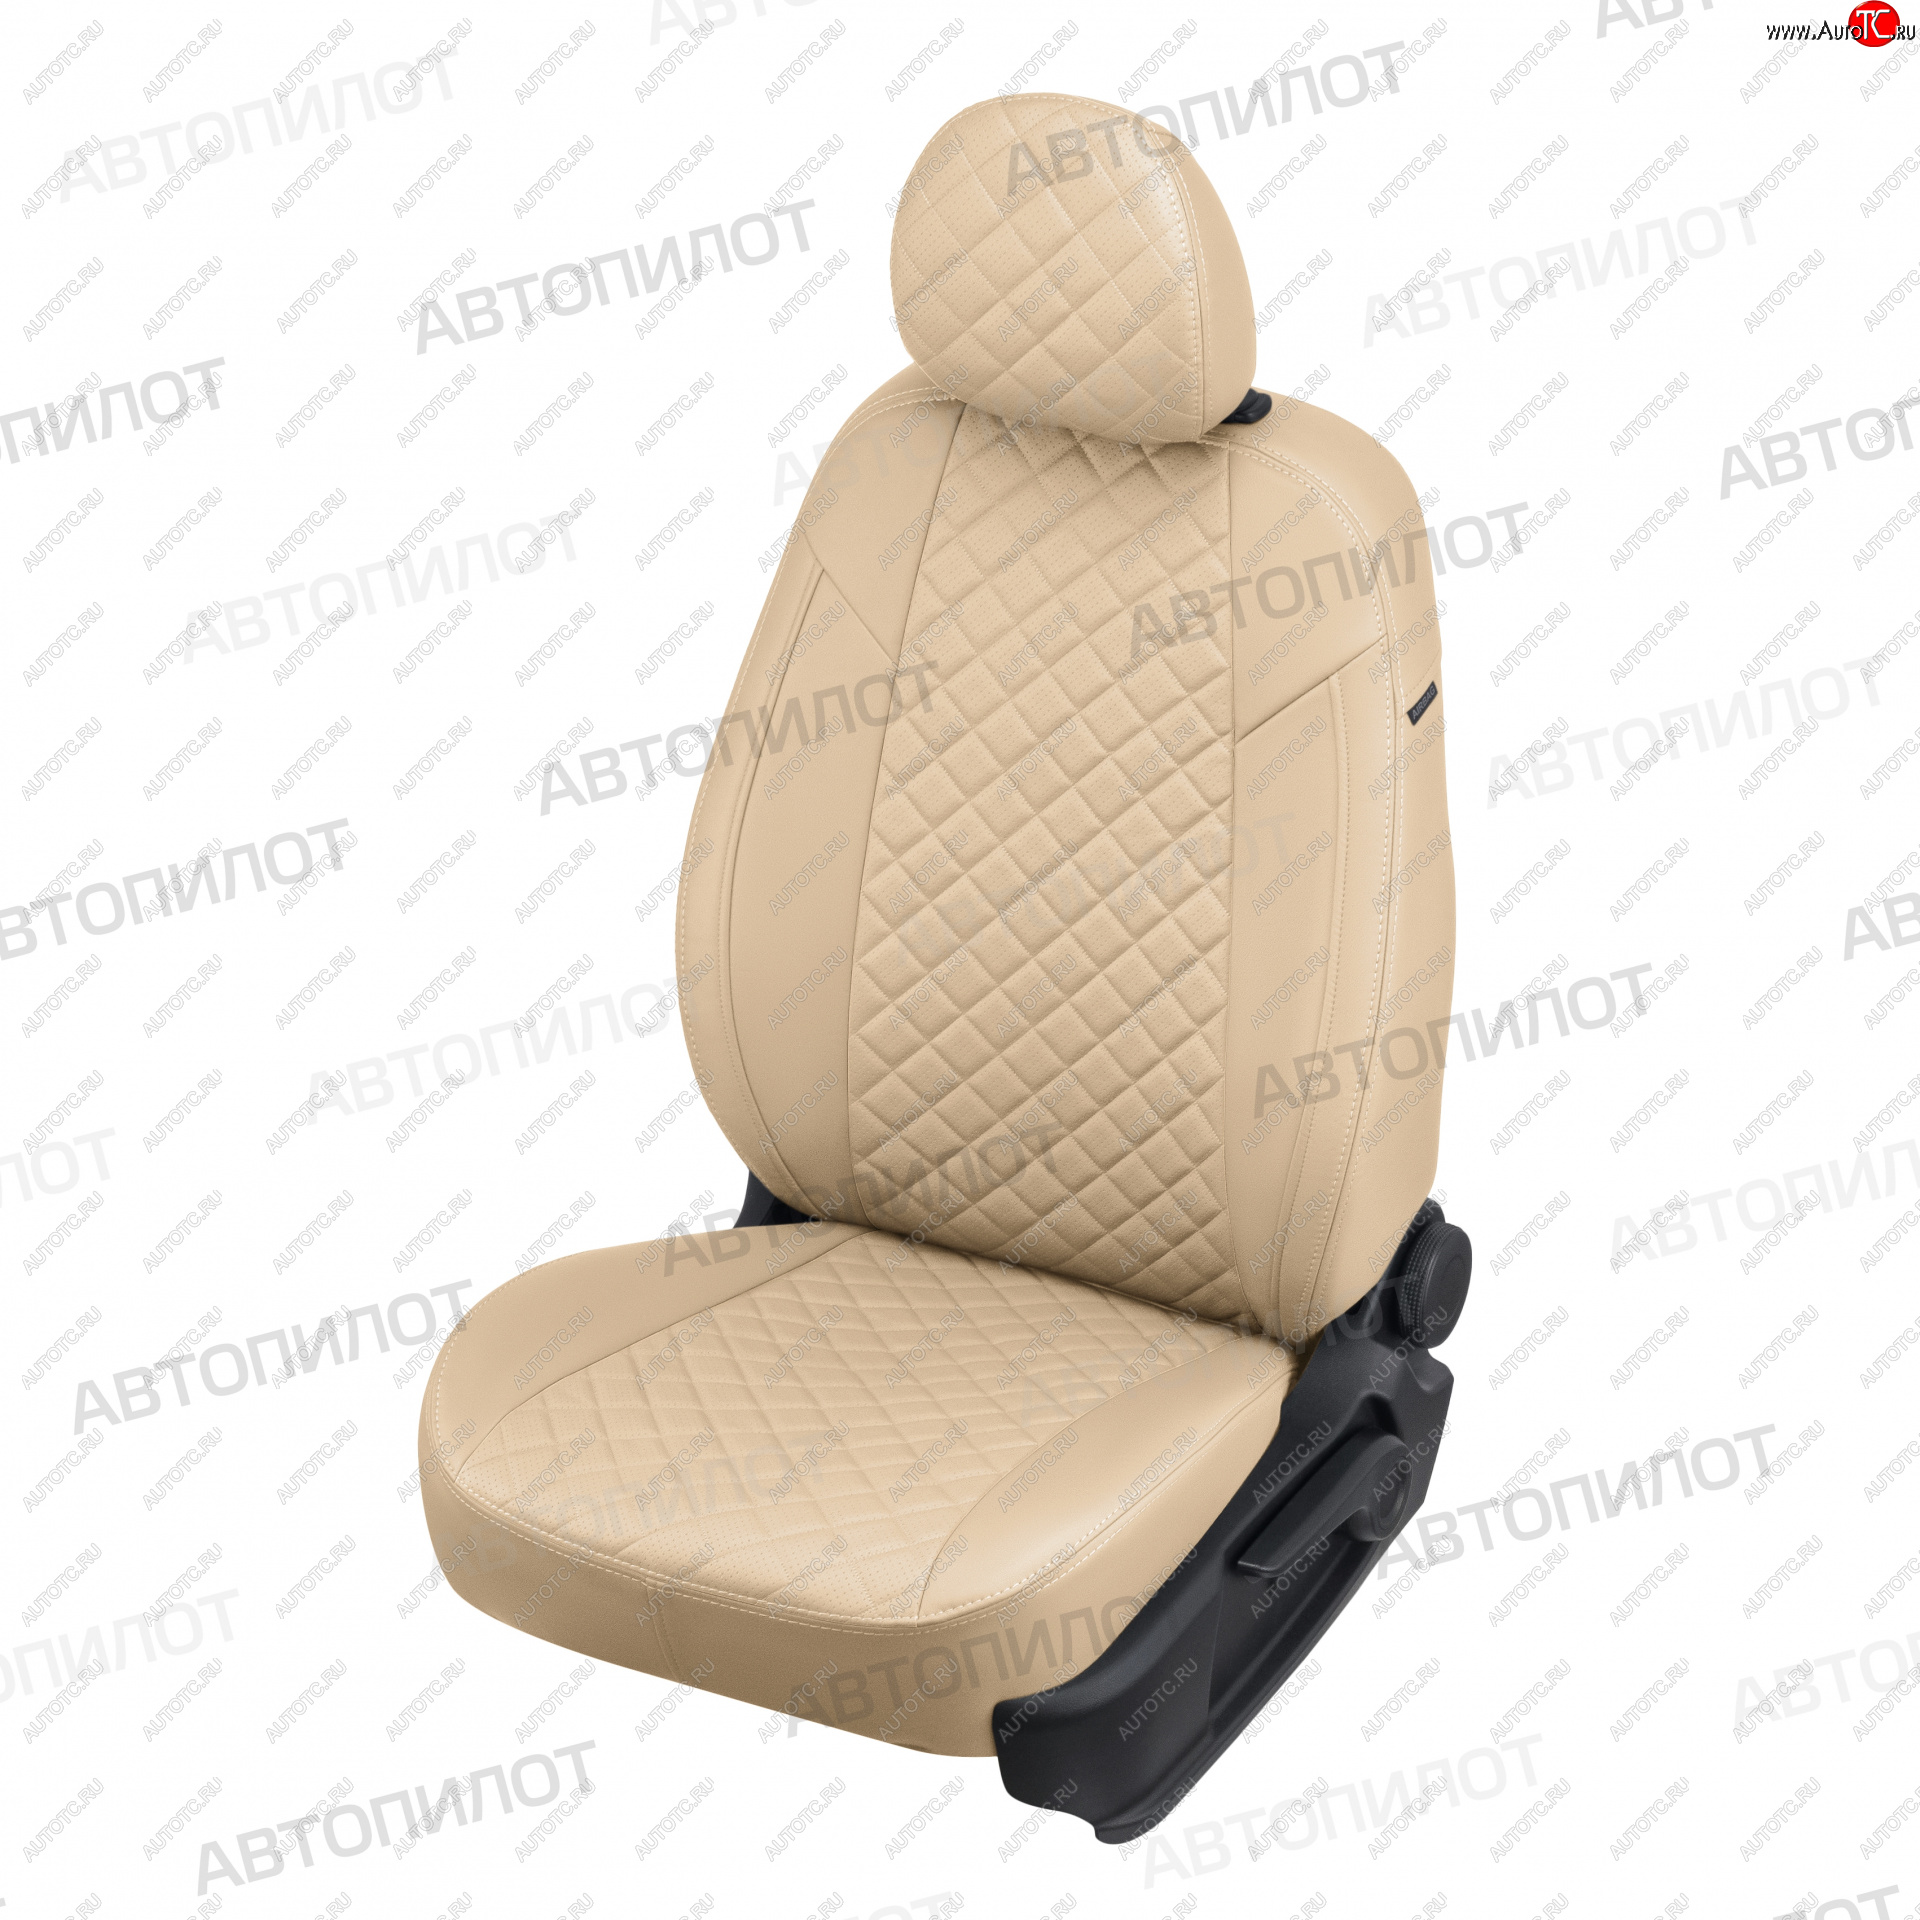 13 999 р. Чехлы сидений (экокожа) Автопилот Ромб  Fiat Bravo  198 (2007-2015) (бежевый)